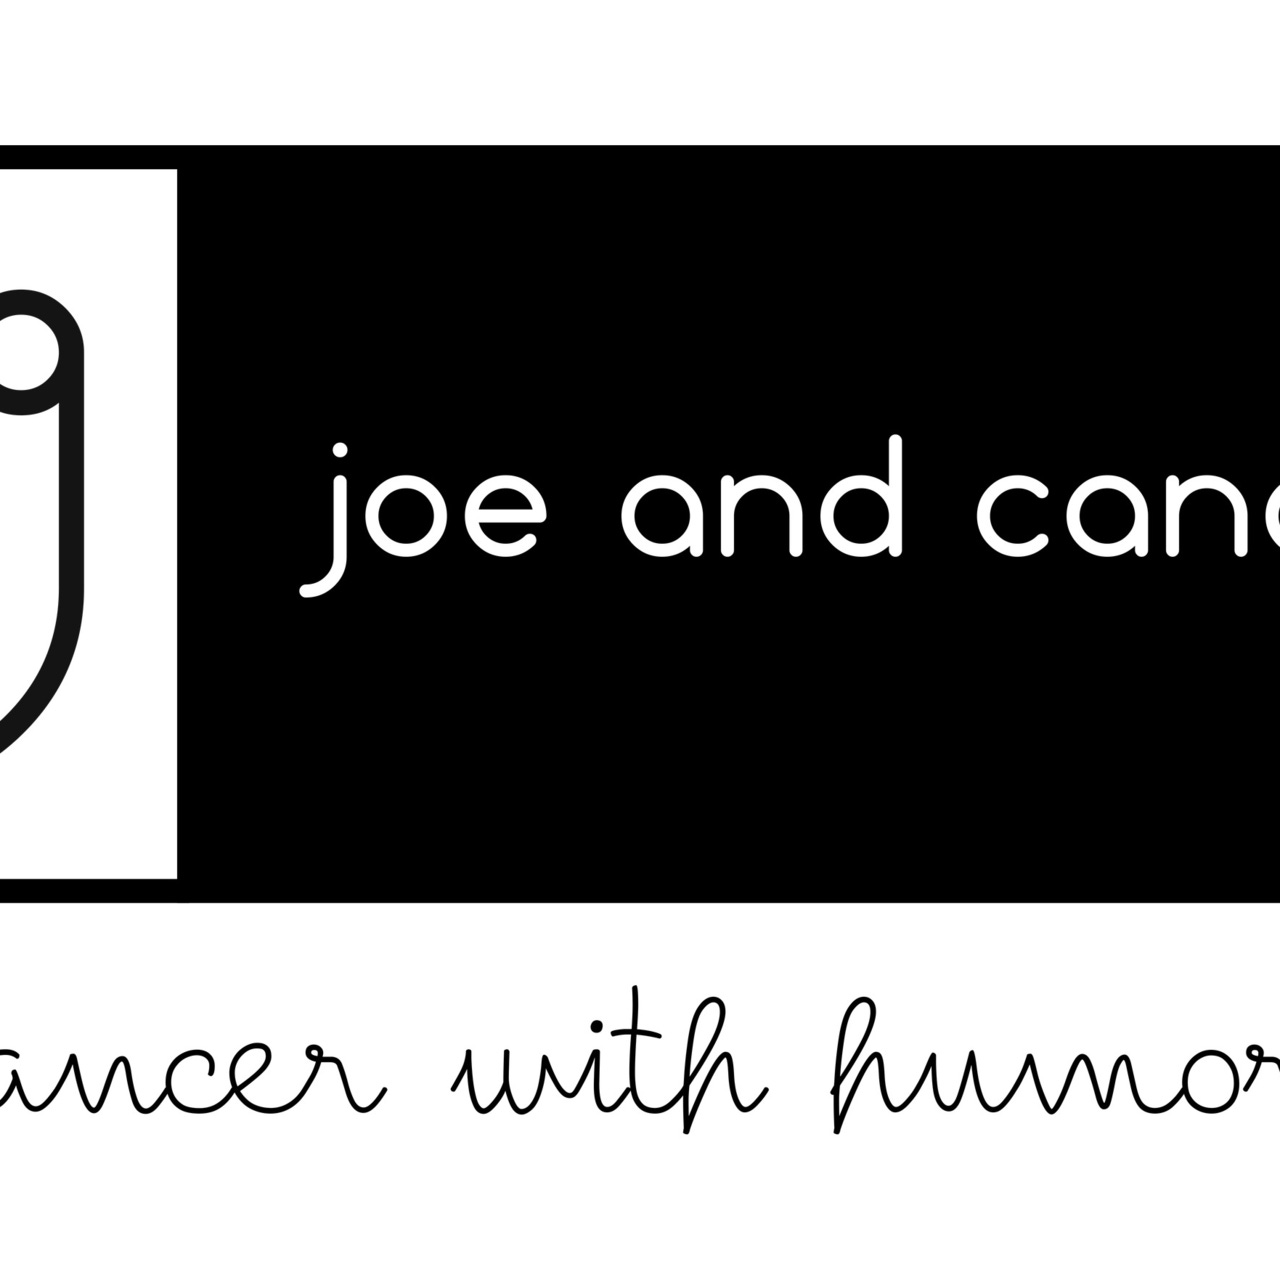 Joe’s Cancer Journey